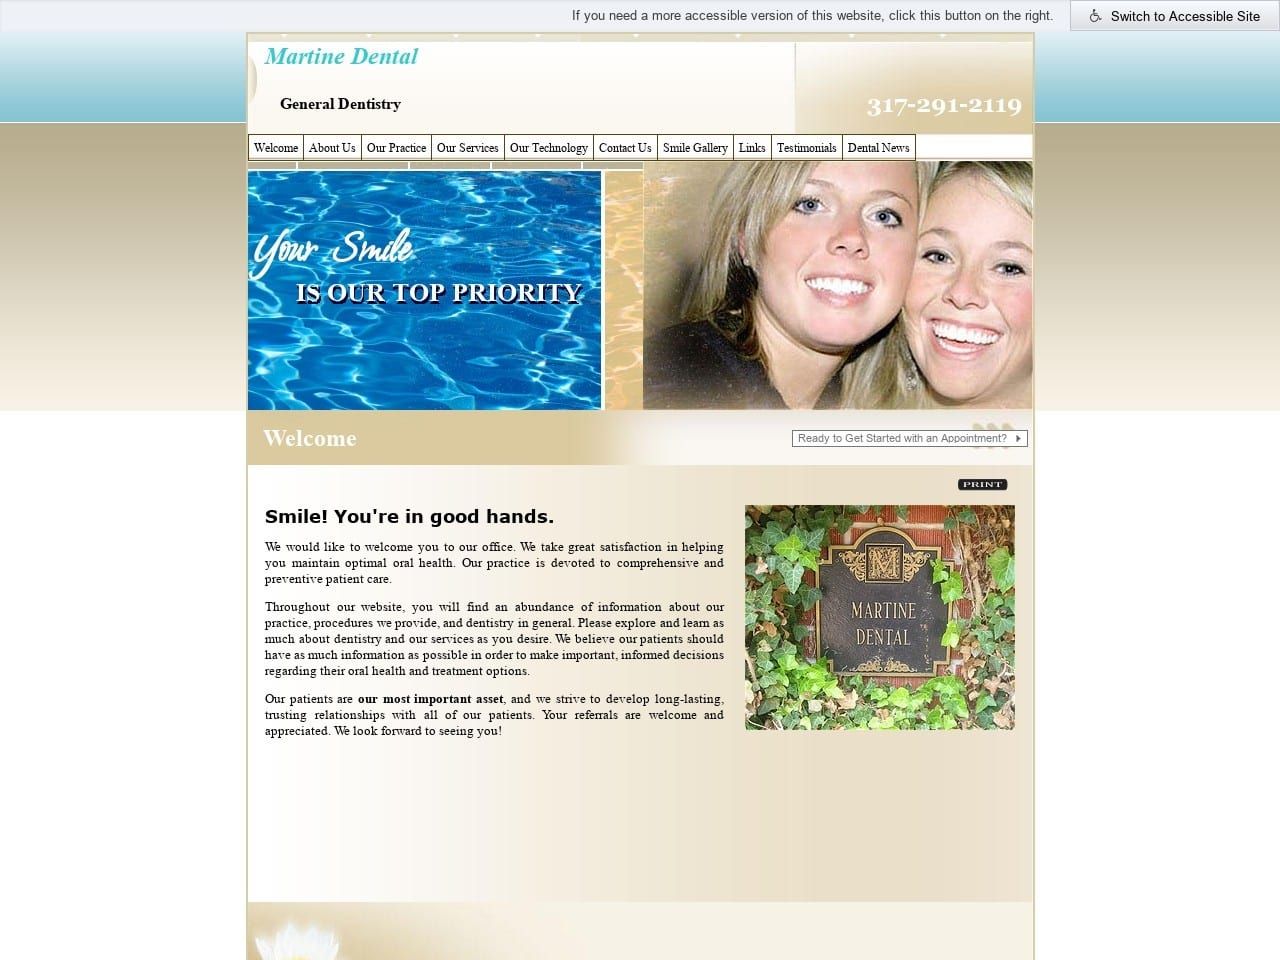 Martine Dental Website Screenshot from martinedental.com